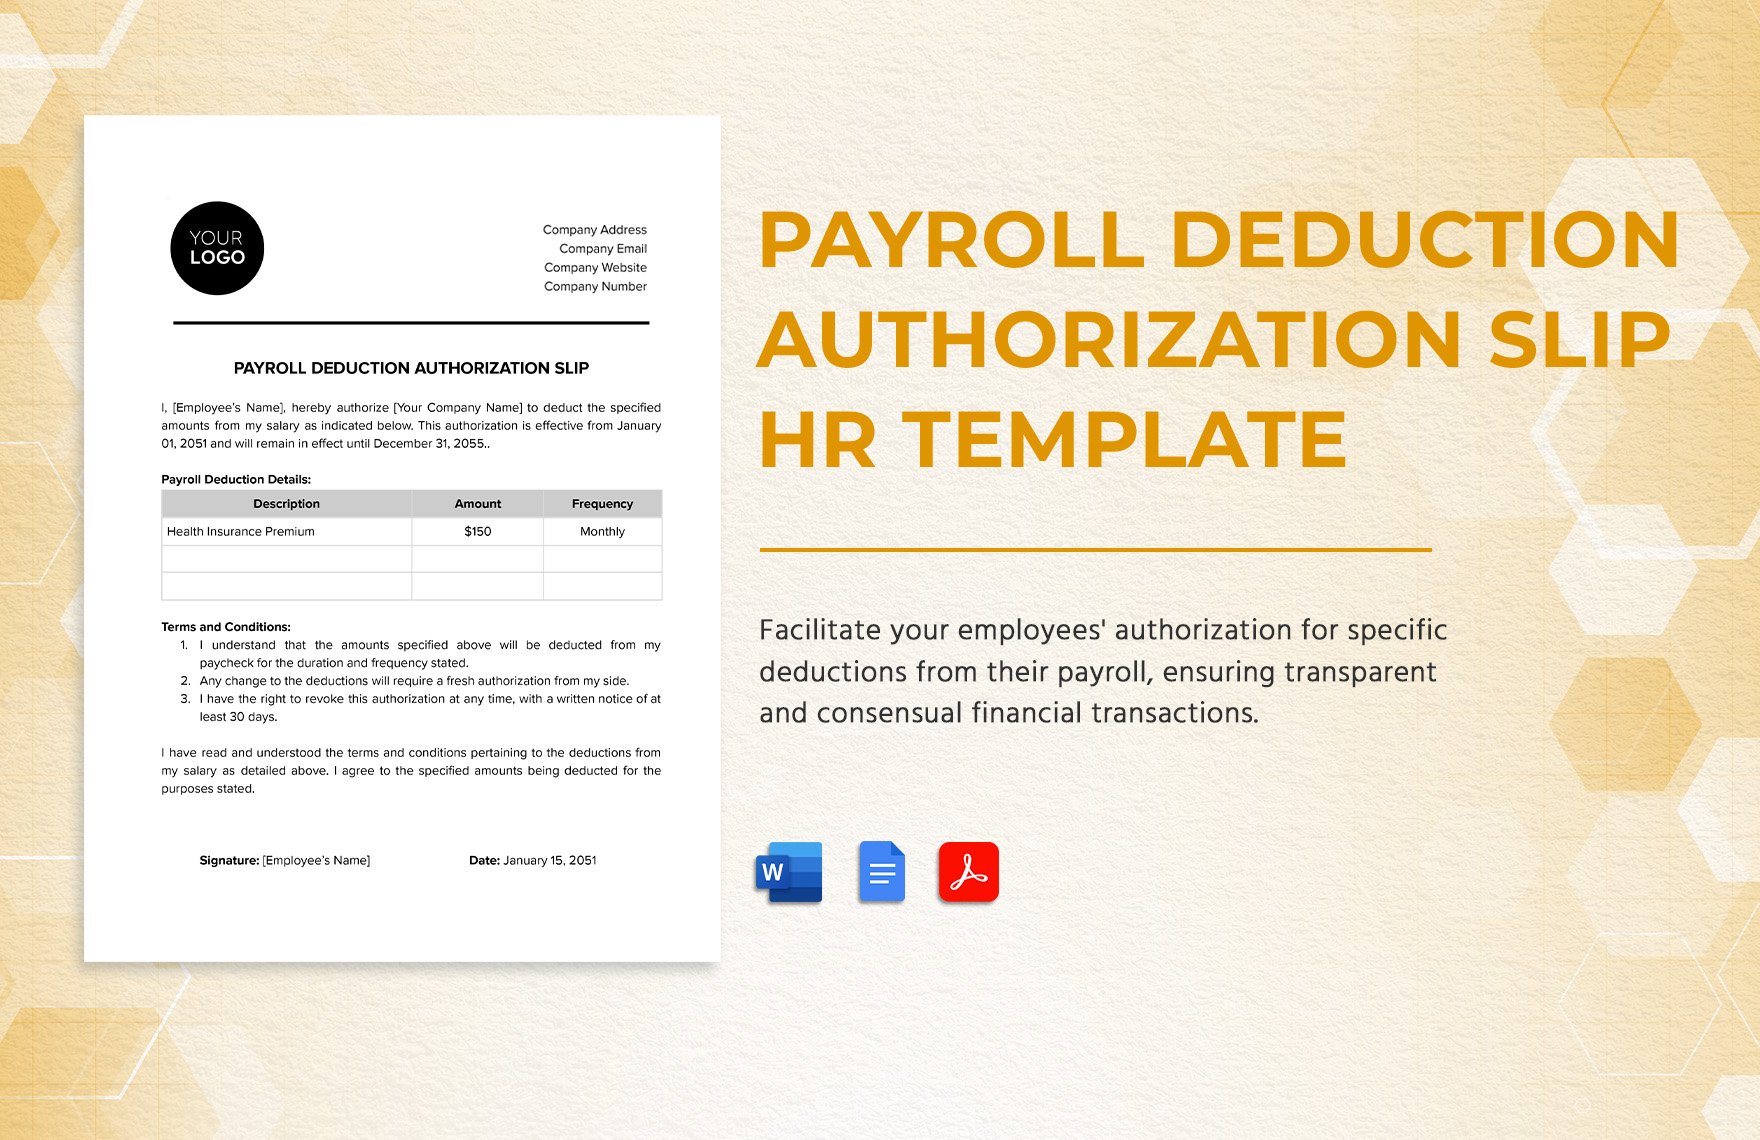 Payroll Deduction Authorization Slip HR Template